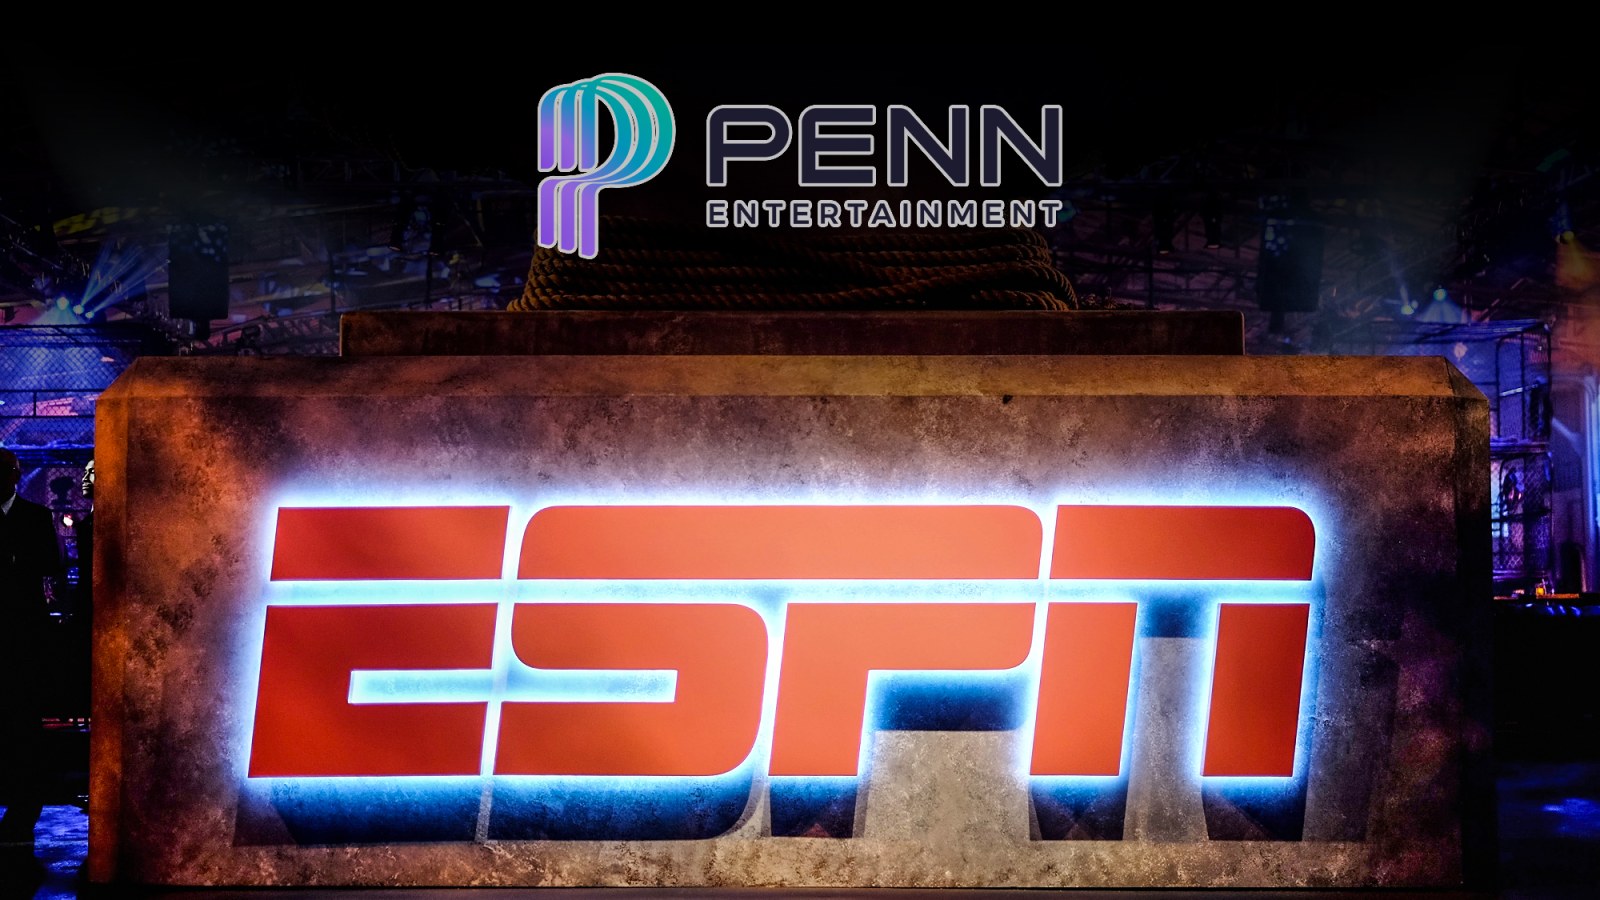 The Penn Entertainment-ESPN Partnership